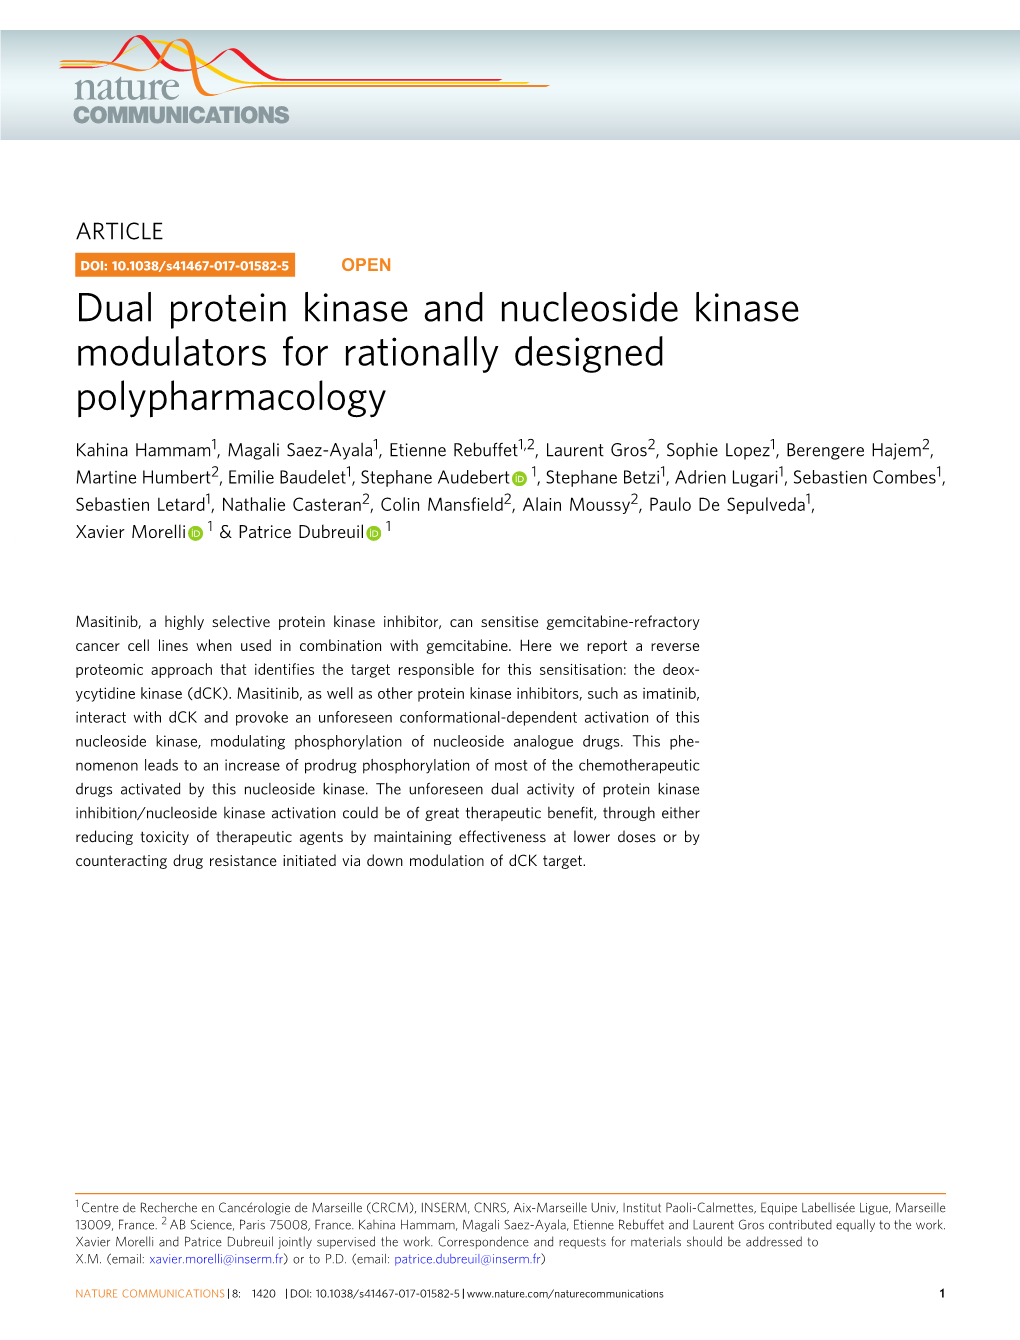 Dual Protein Kinase and Nucleoside Kinase Modulators for Rationally Designed Polypharmacology